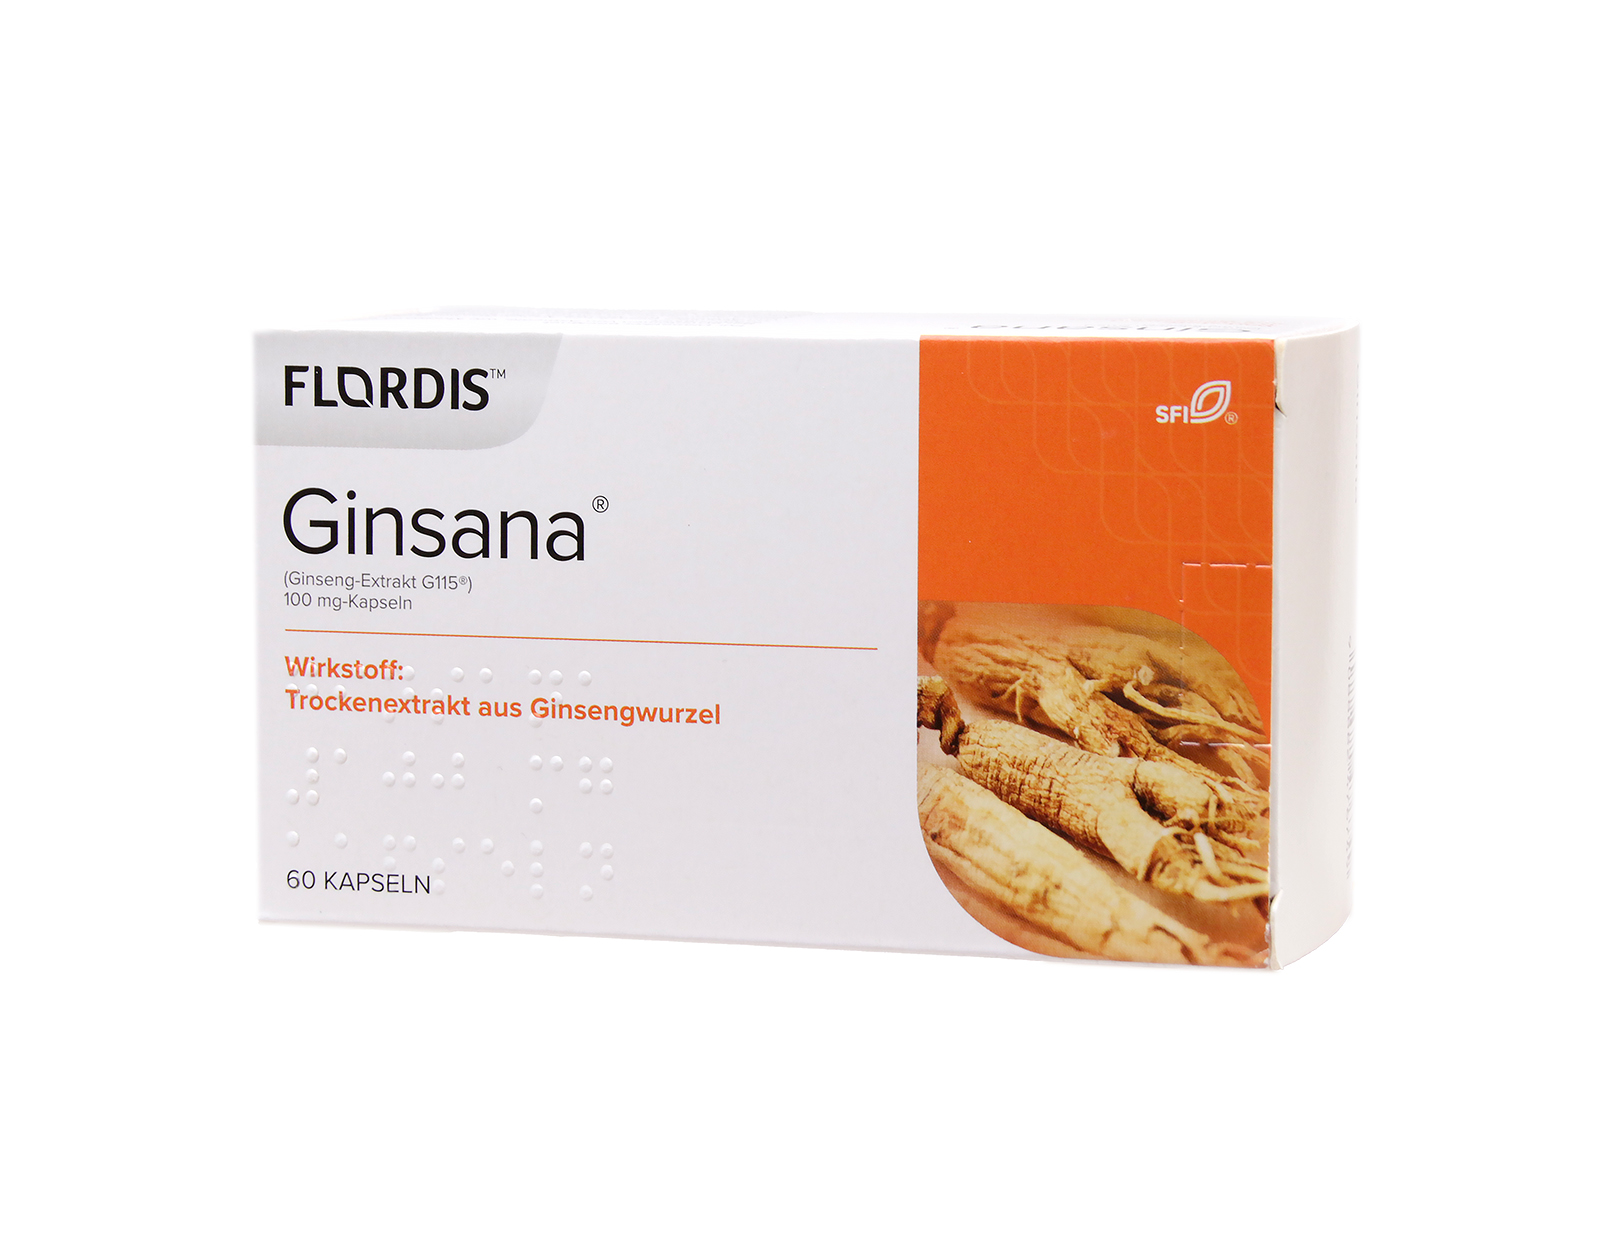 Ginsana® (Ginseng-Extrakt G115) 100 mg – Kapseln